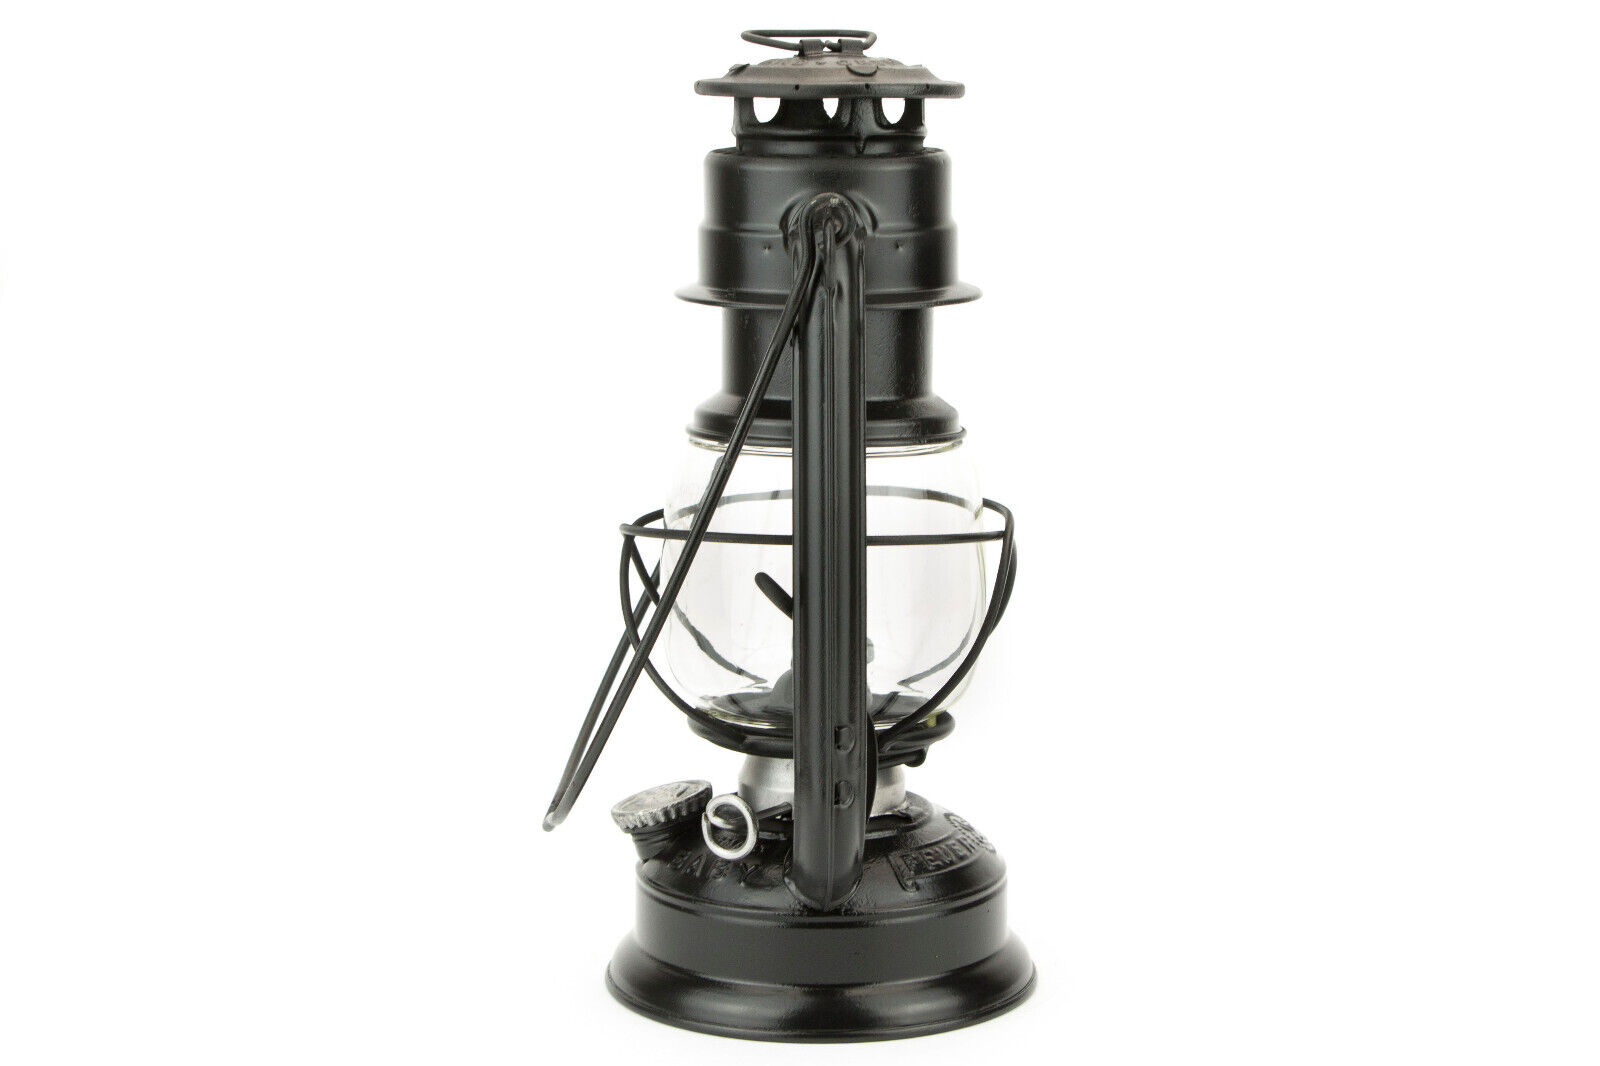 ::FEUERHAND Baby 275 Germany Lantern Black Vintage Kerosene Oil Storm Lamp Camp